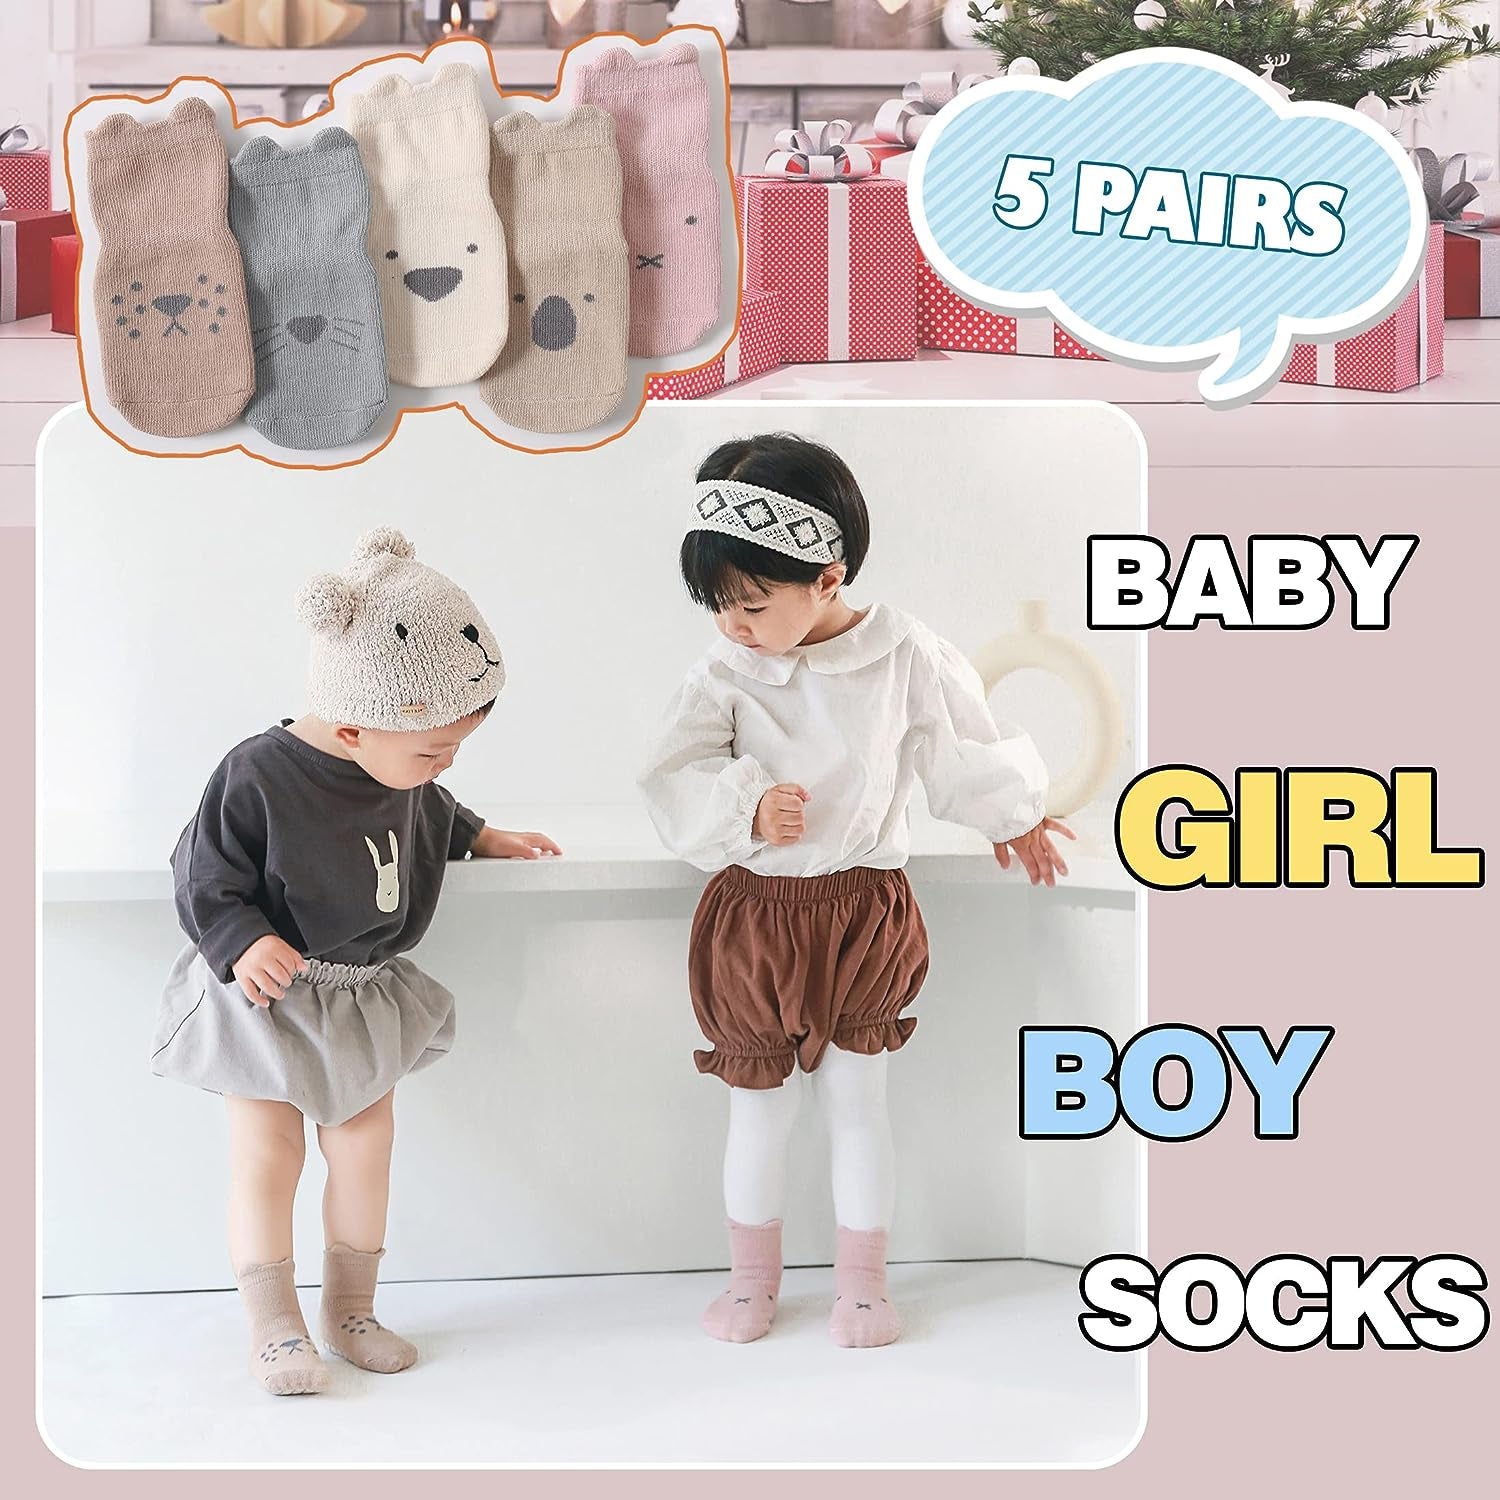 Toddlers Non Slip Socks with Grips Baby Girls Boys anti Skid Crew Cotton Gift Socks for Infants Kids